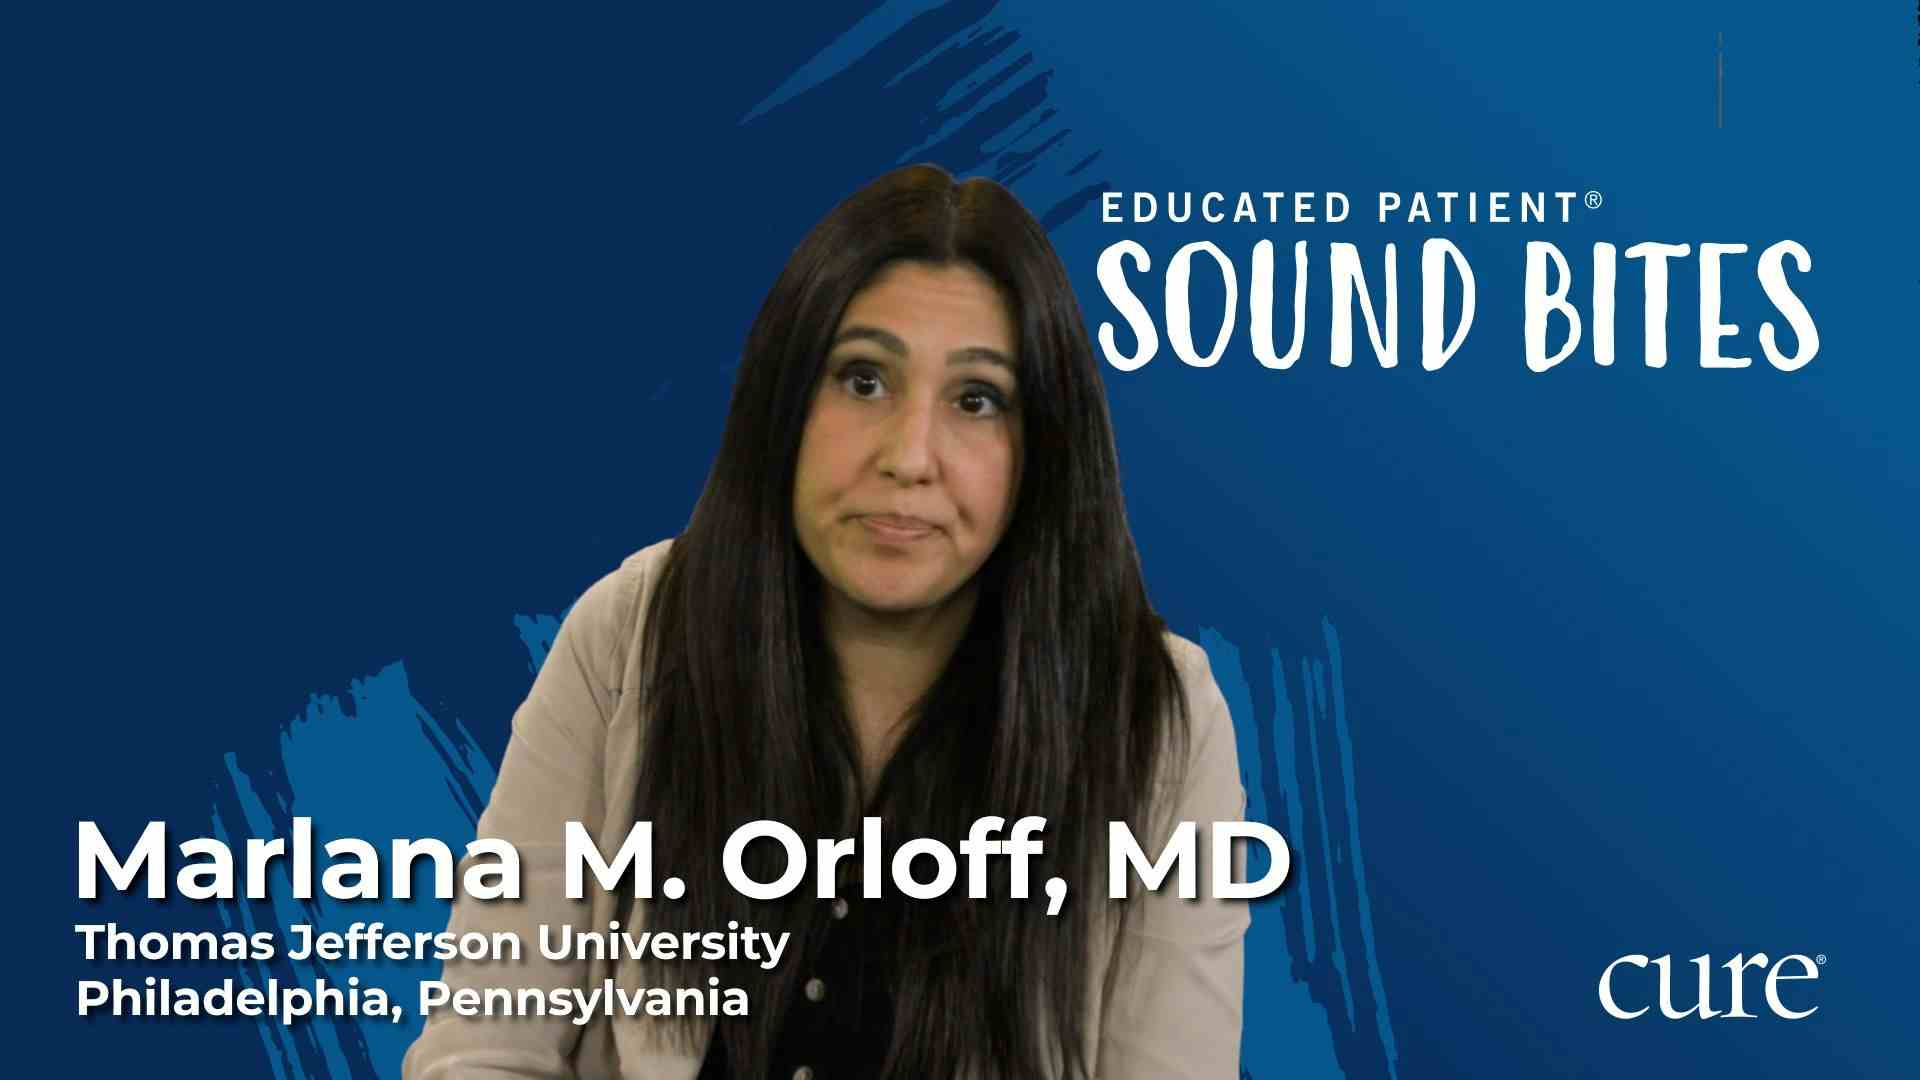 Marlana M. Orloff, MD, an expert on uveal melanoma